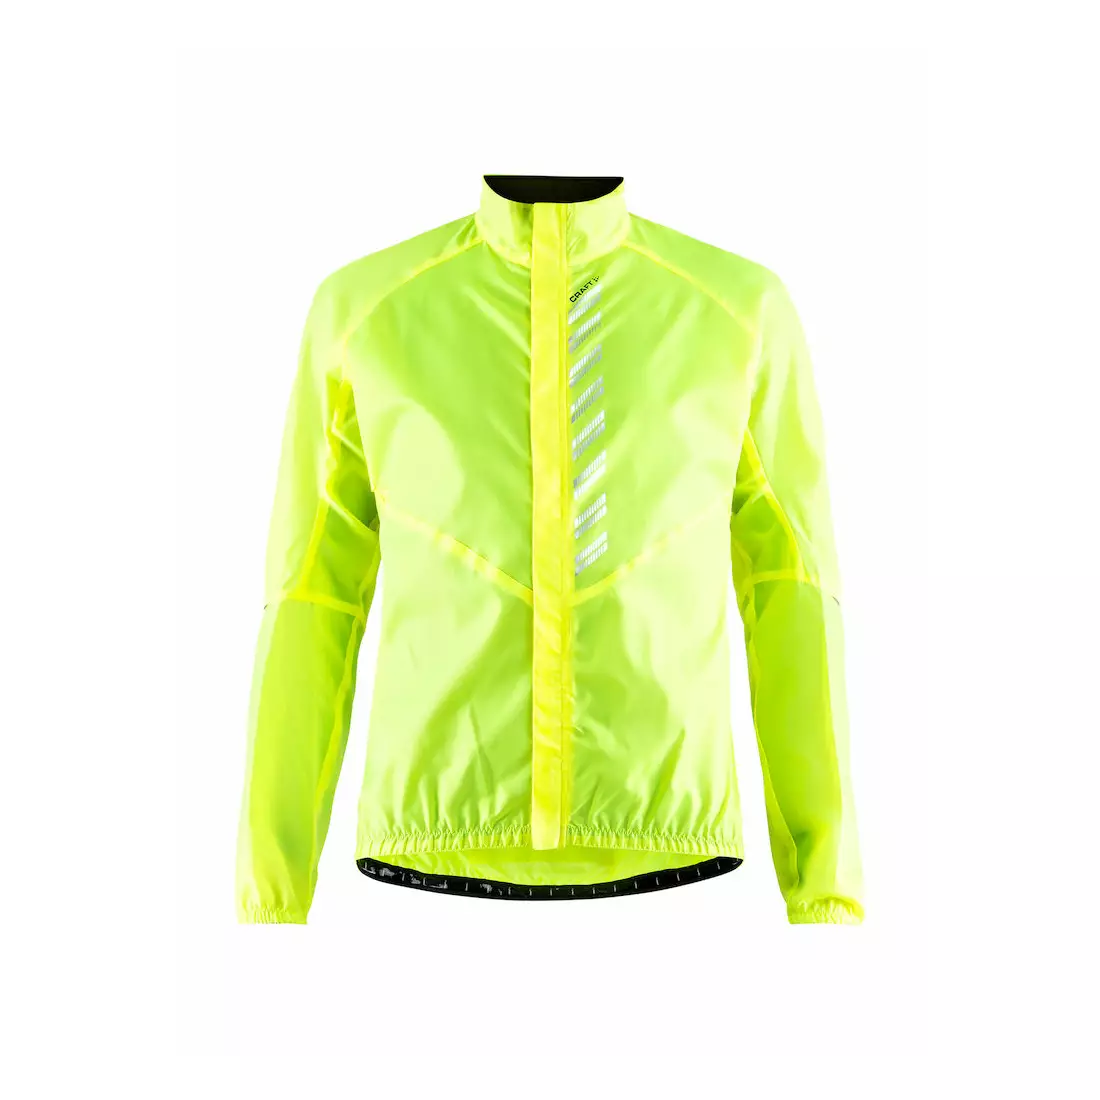 CRAFT Mist Wind JKT pánská cyklistická bunda, větrovka 1906093-851999, fluor